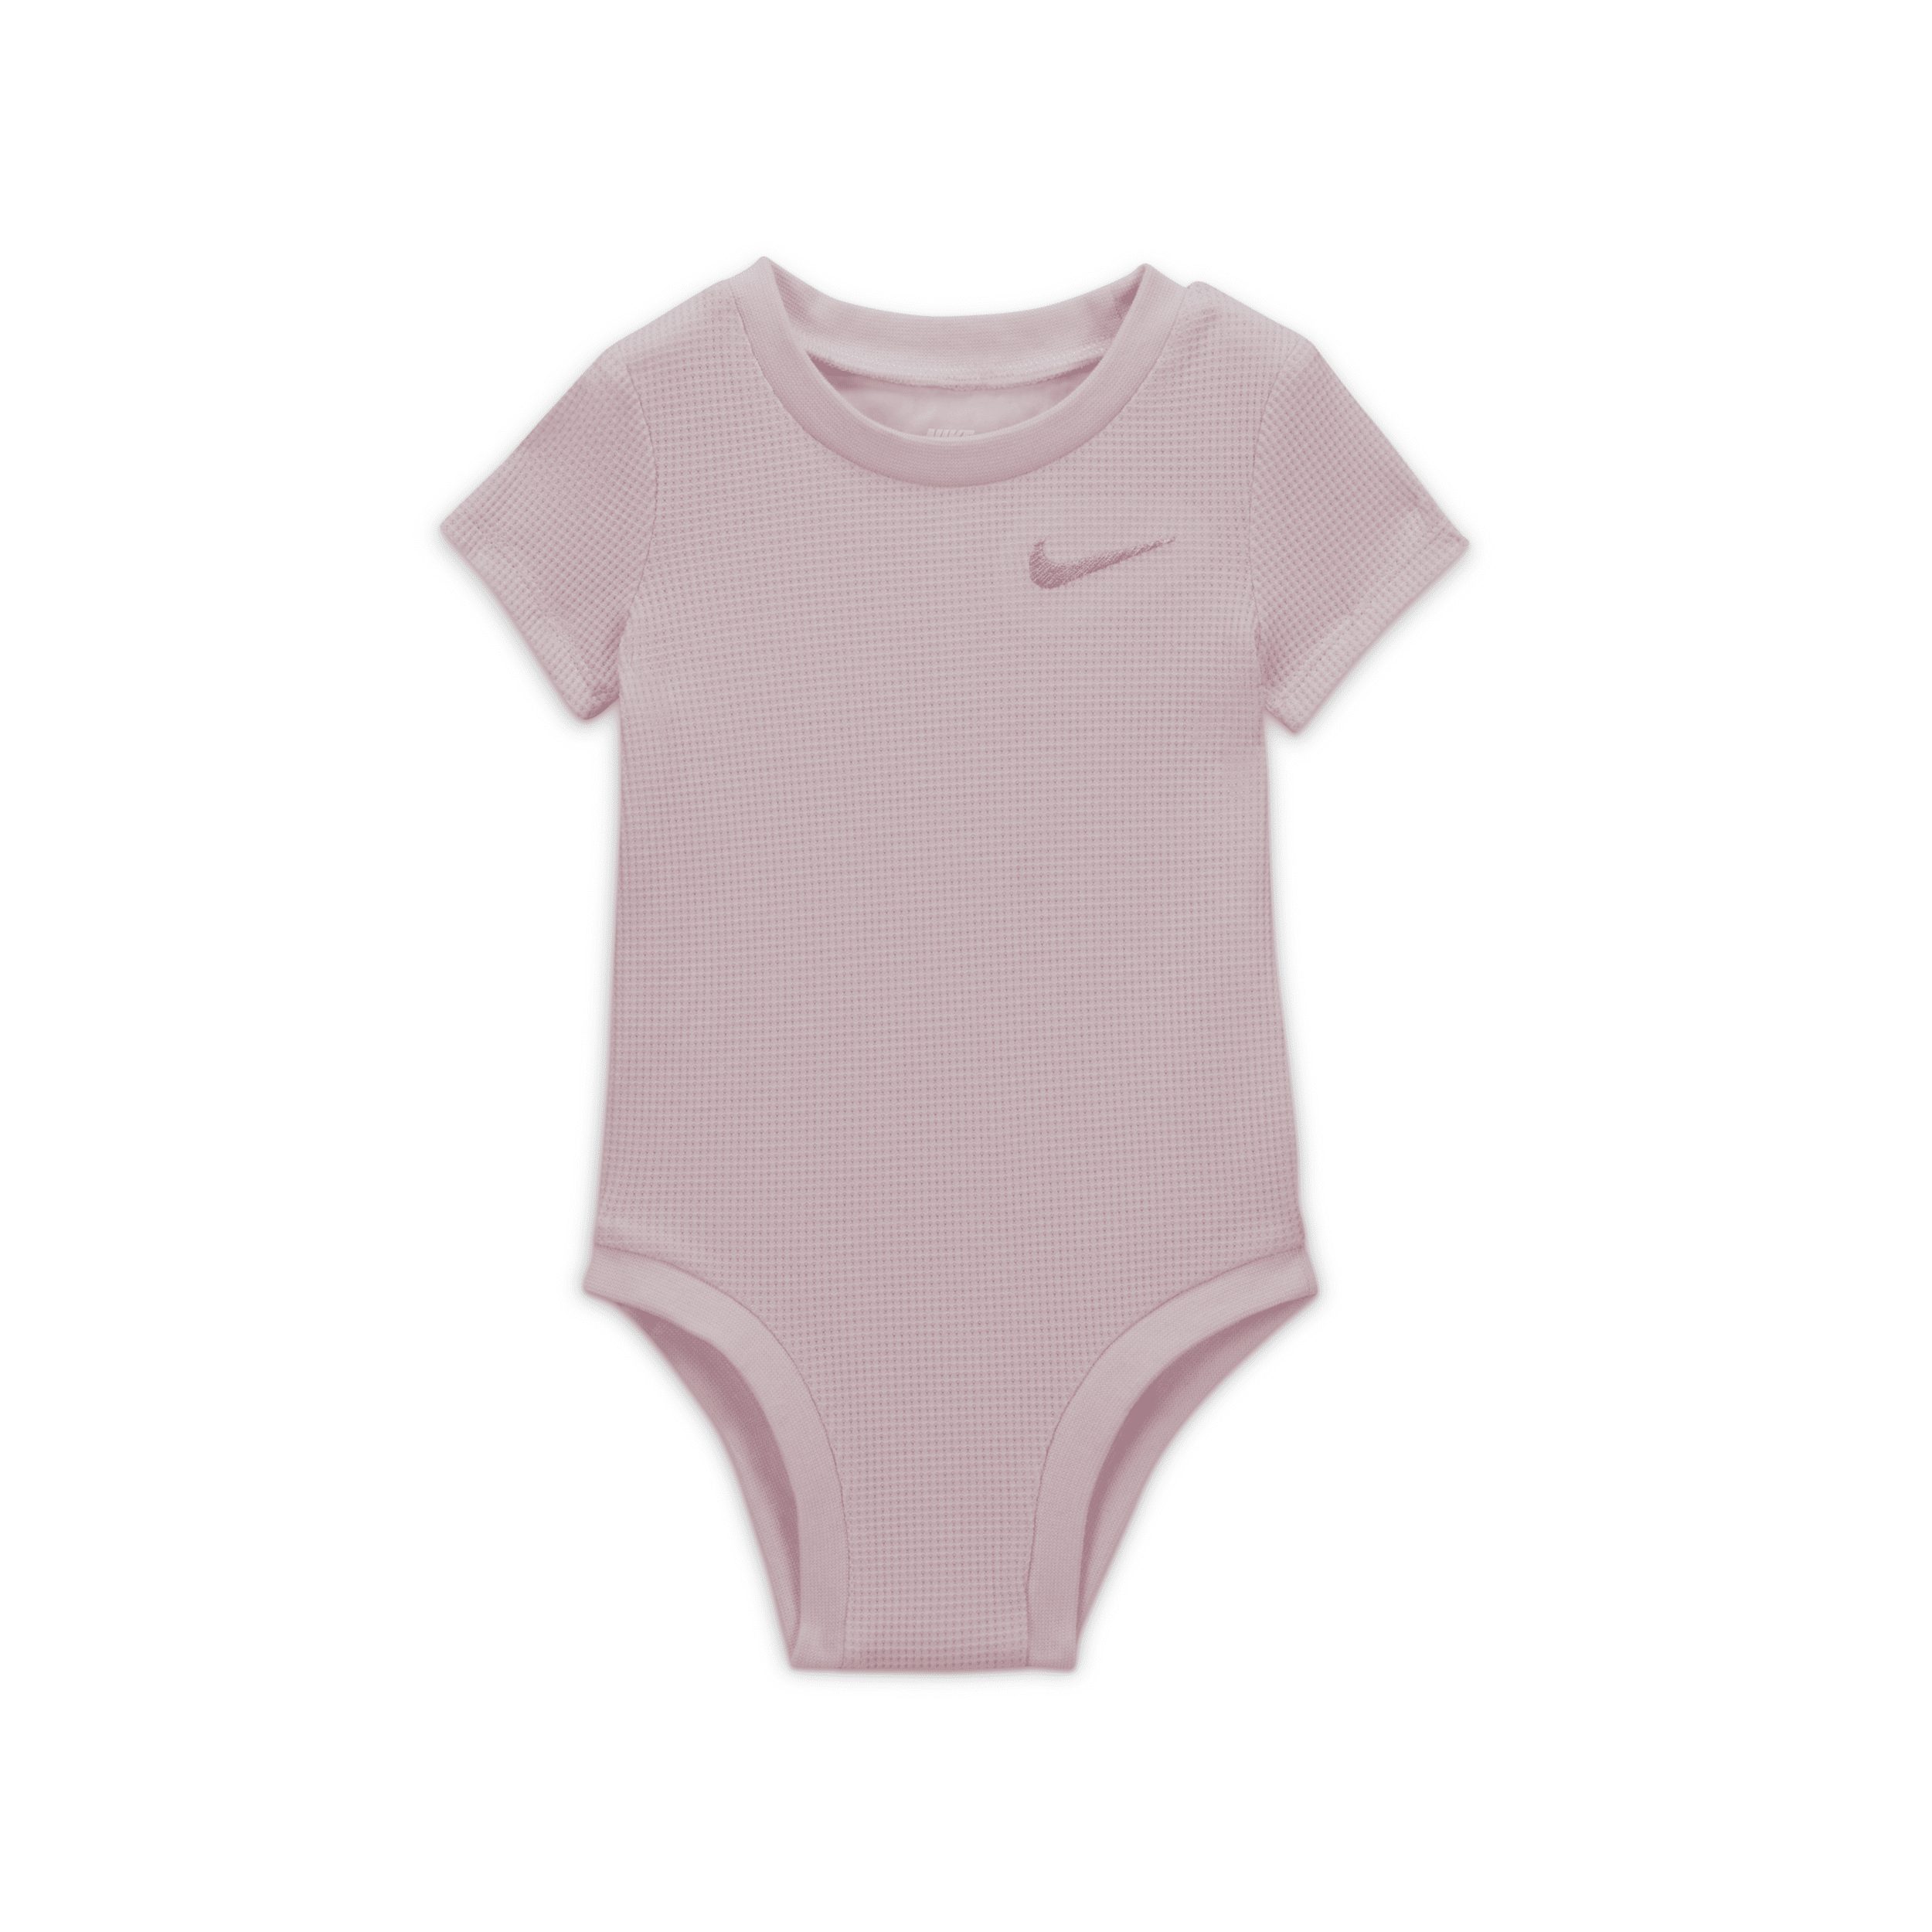 Nike Readyset Baby Bodysuit In Pink